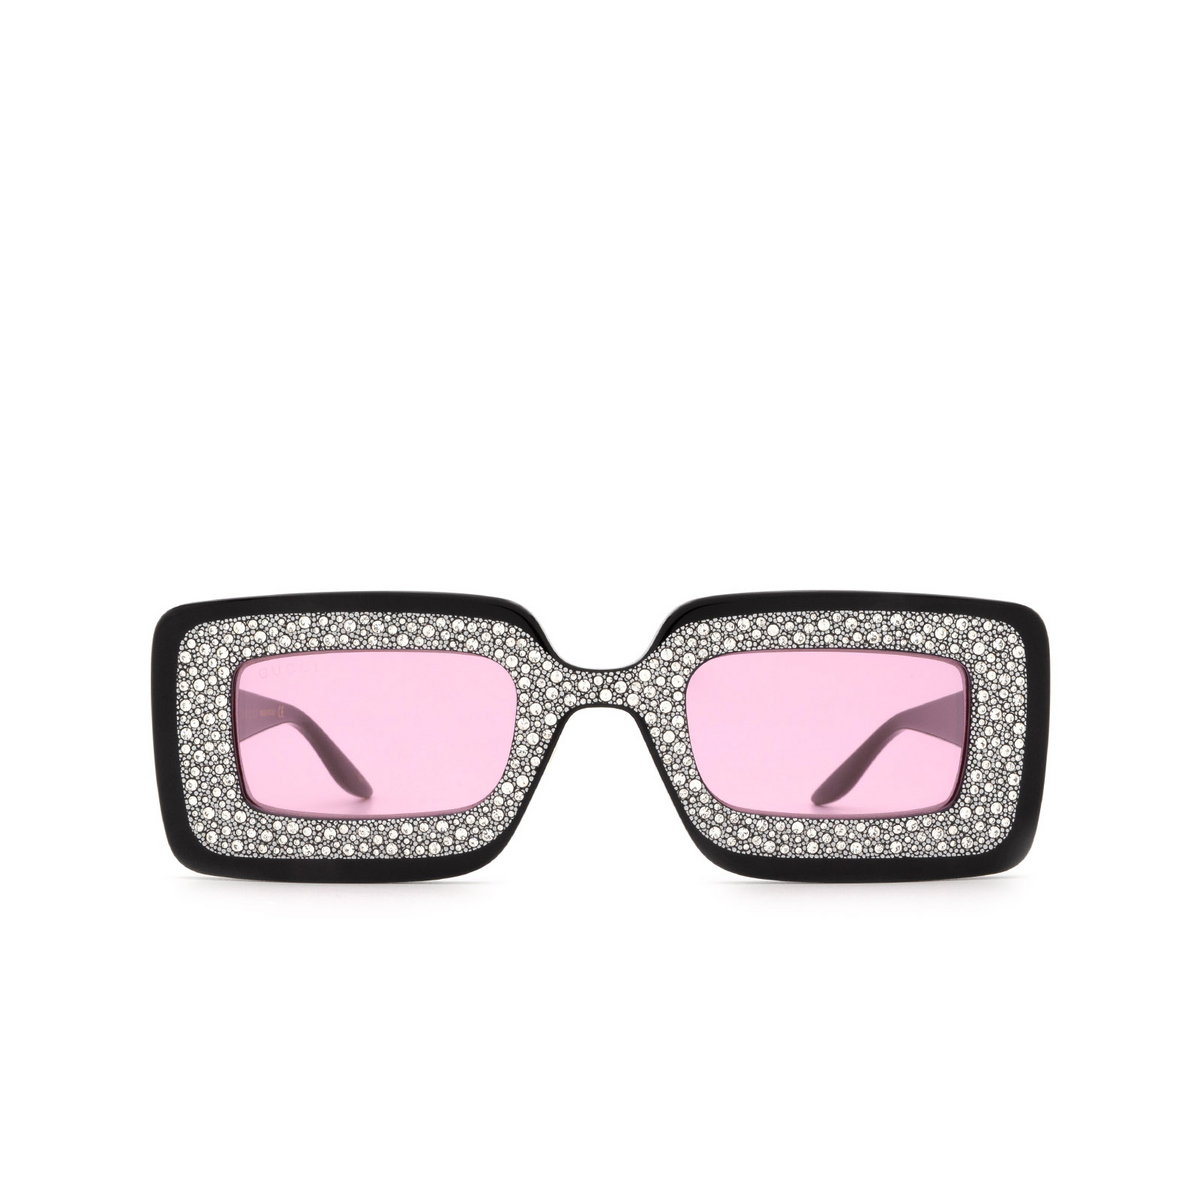 Gucci® Sunglasses: GG0974S color Black 001 - front view.